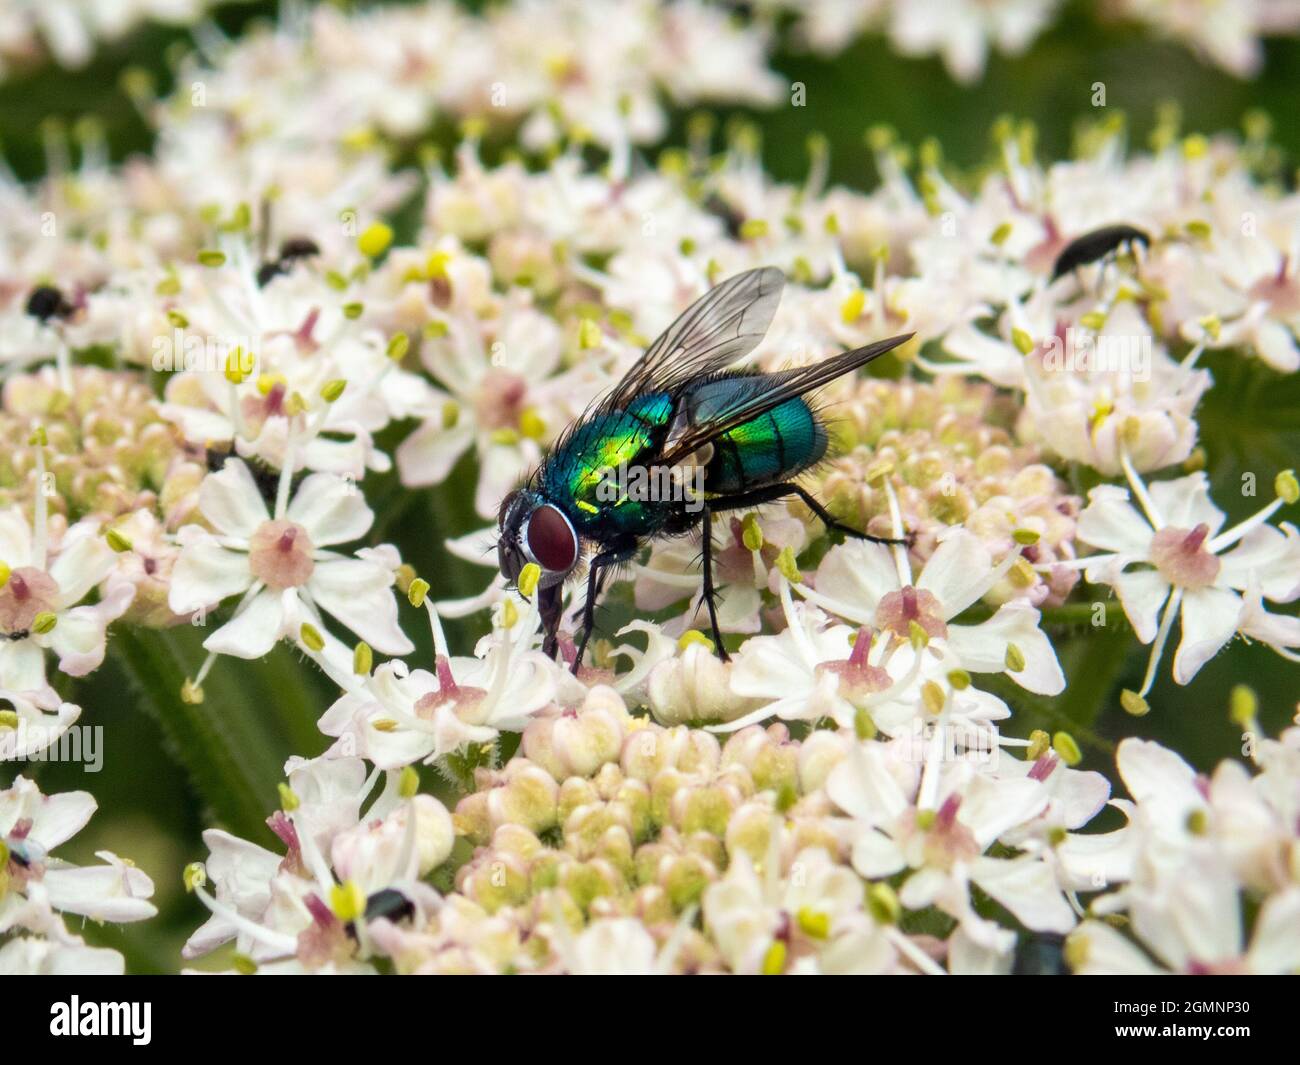 Metallic blue-green greenbottle fly, Lucilia sericata, a type of blowfly, Wield, Hampshire, UK Stock Photo